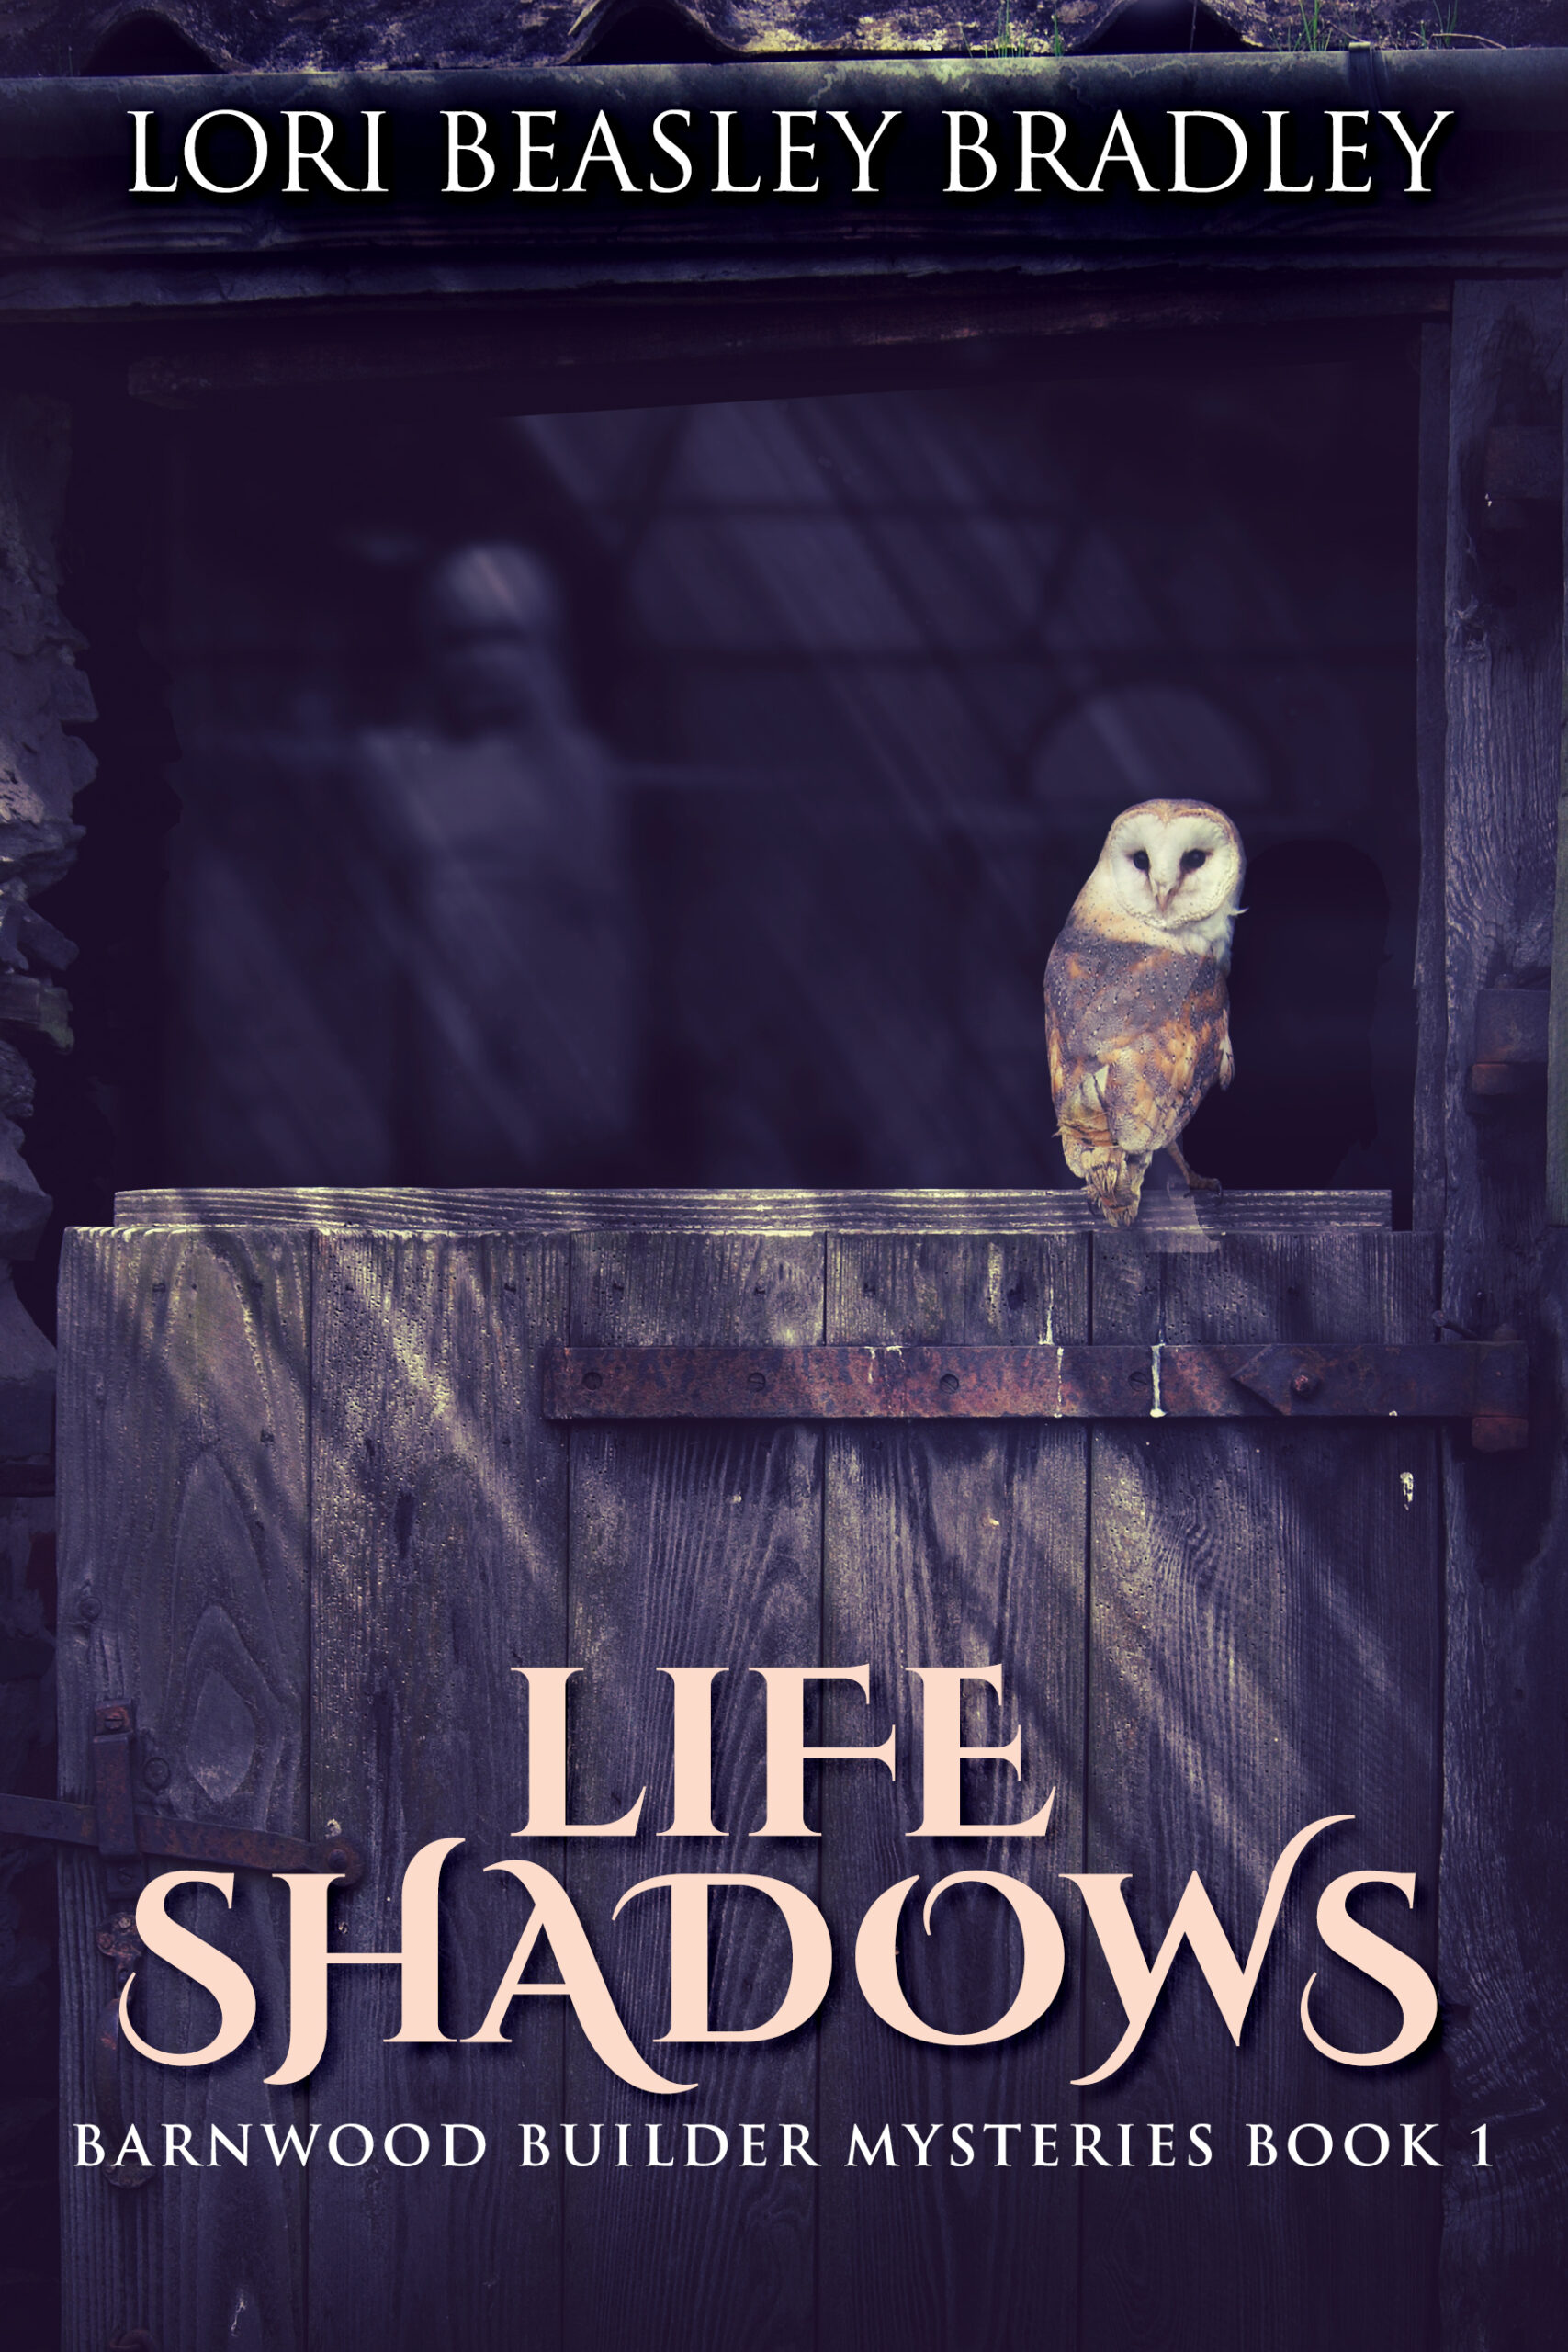 FREE: Life Shadows by Lori Beasley Bradley